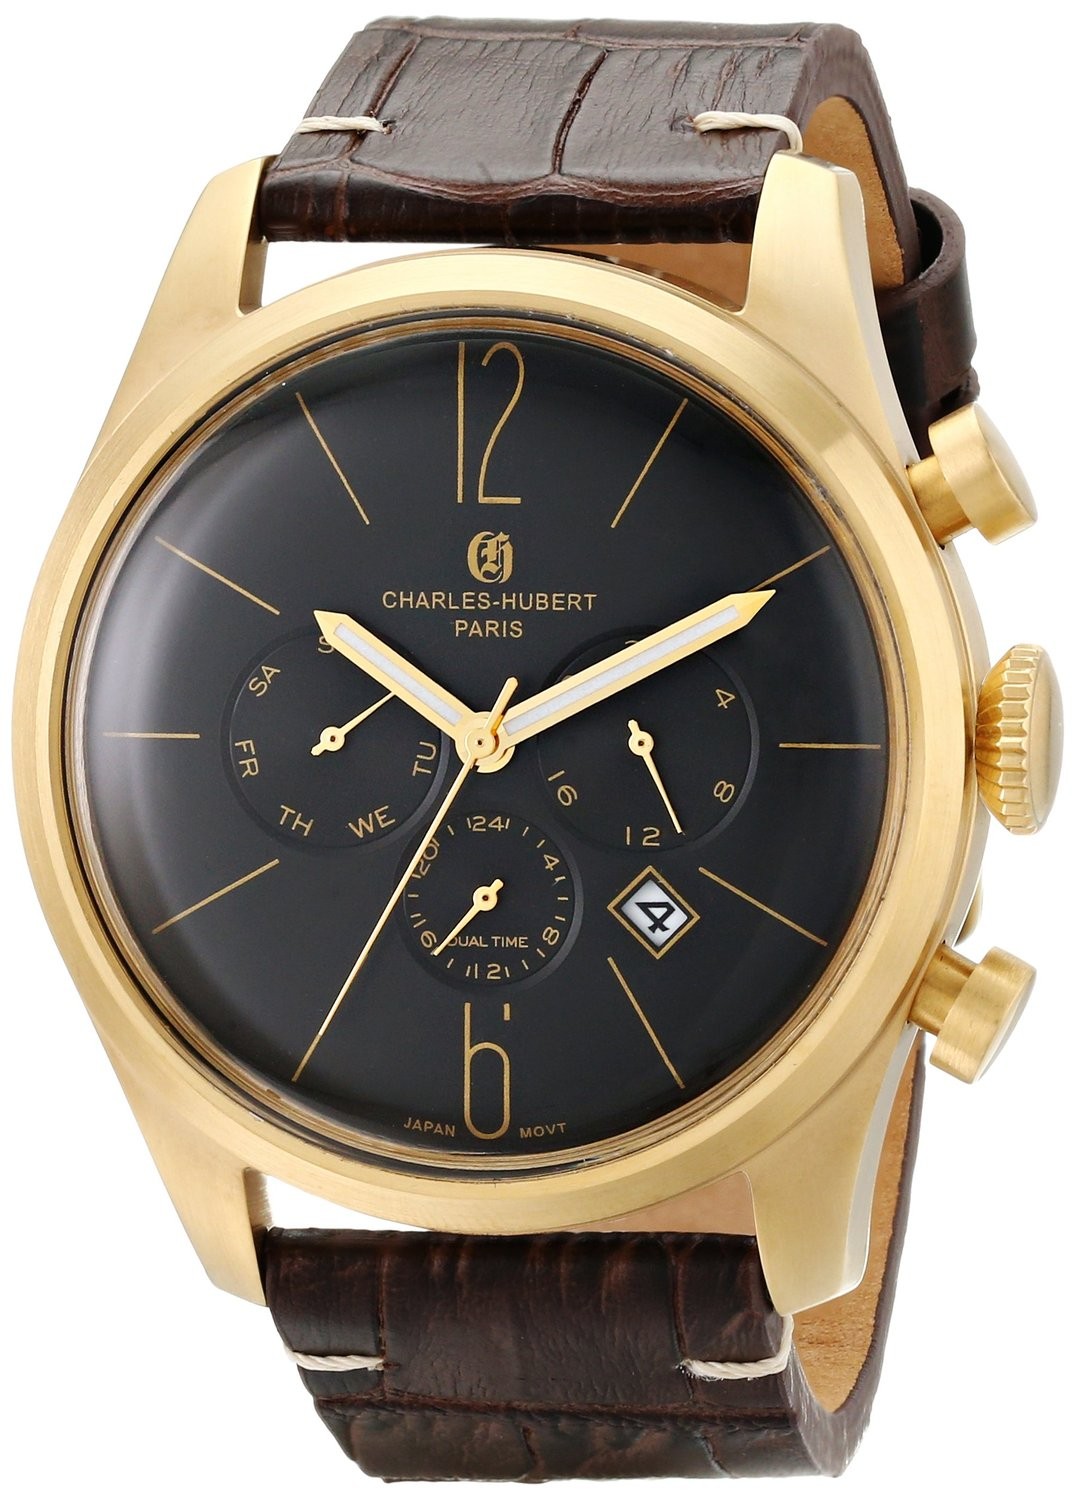 Charles-Hubert Paris Men's Gold-Plated Stainless Steel Dual Time Quartz Watch